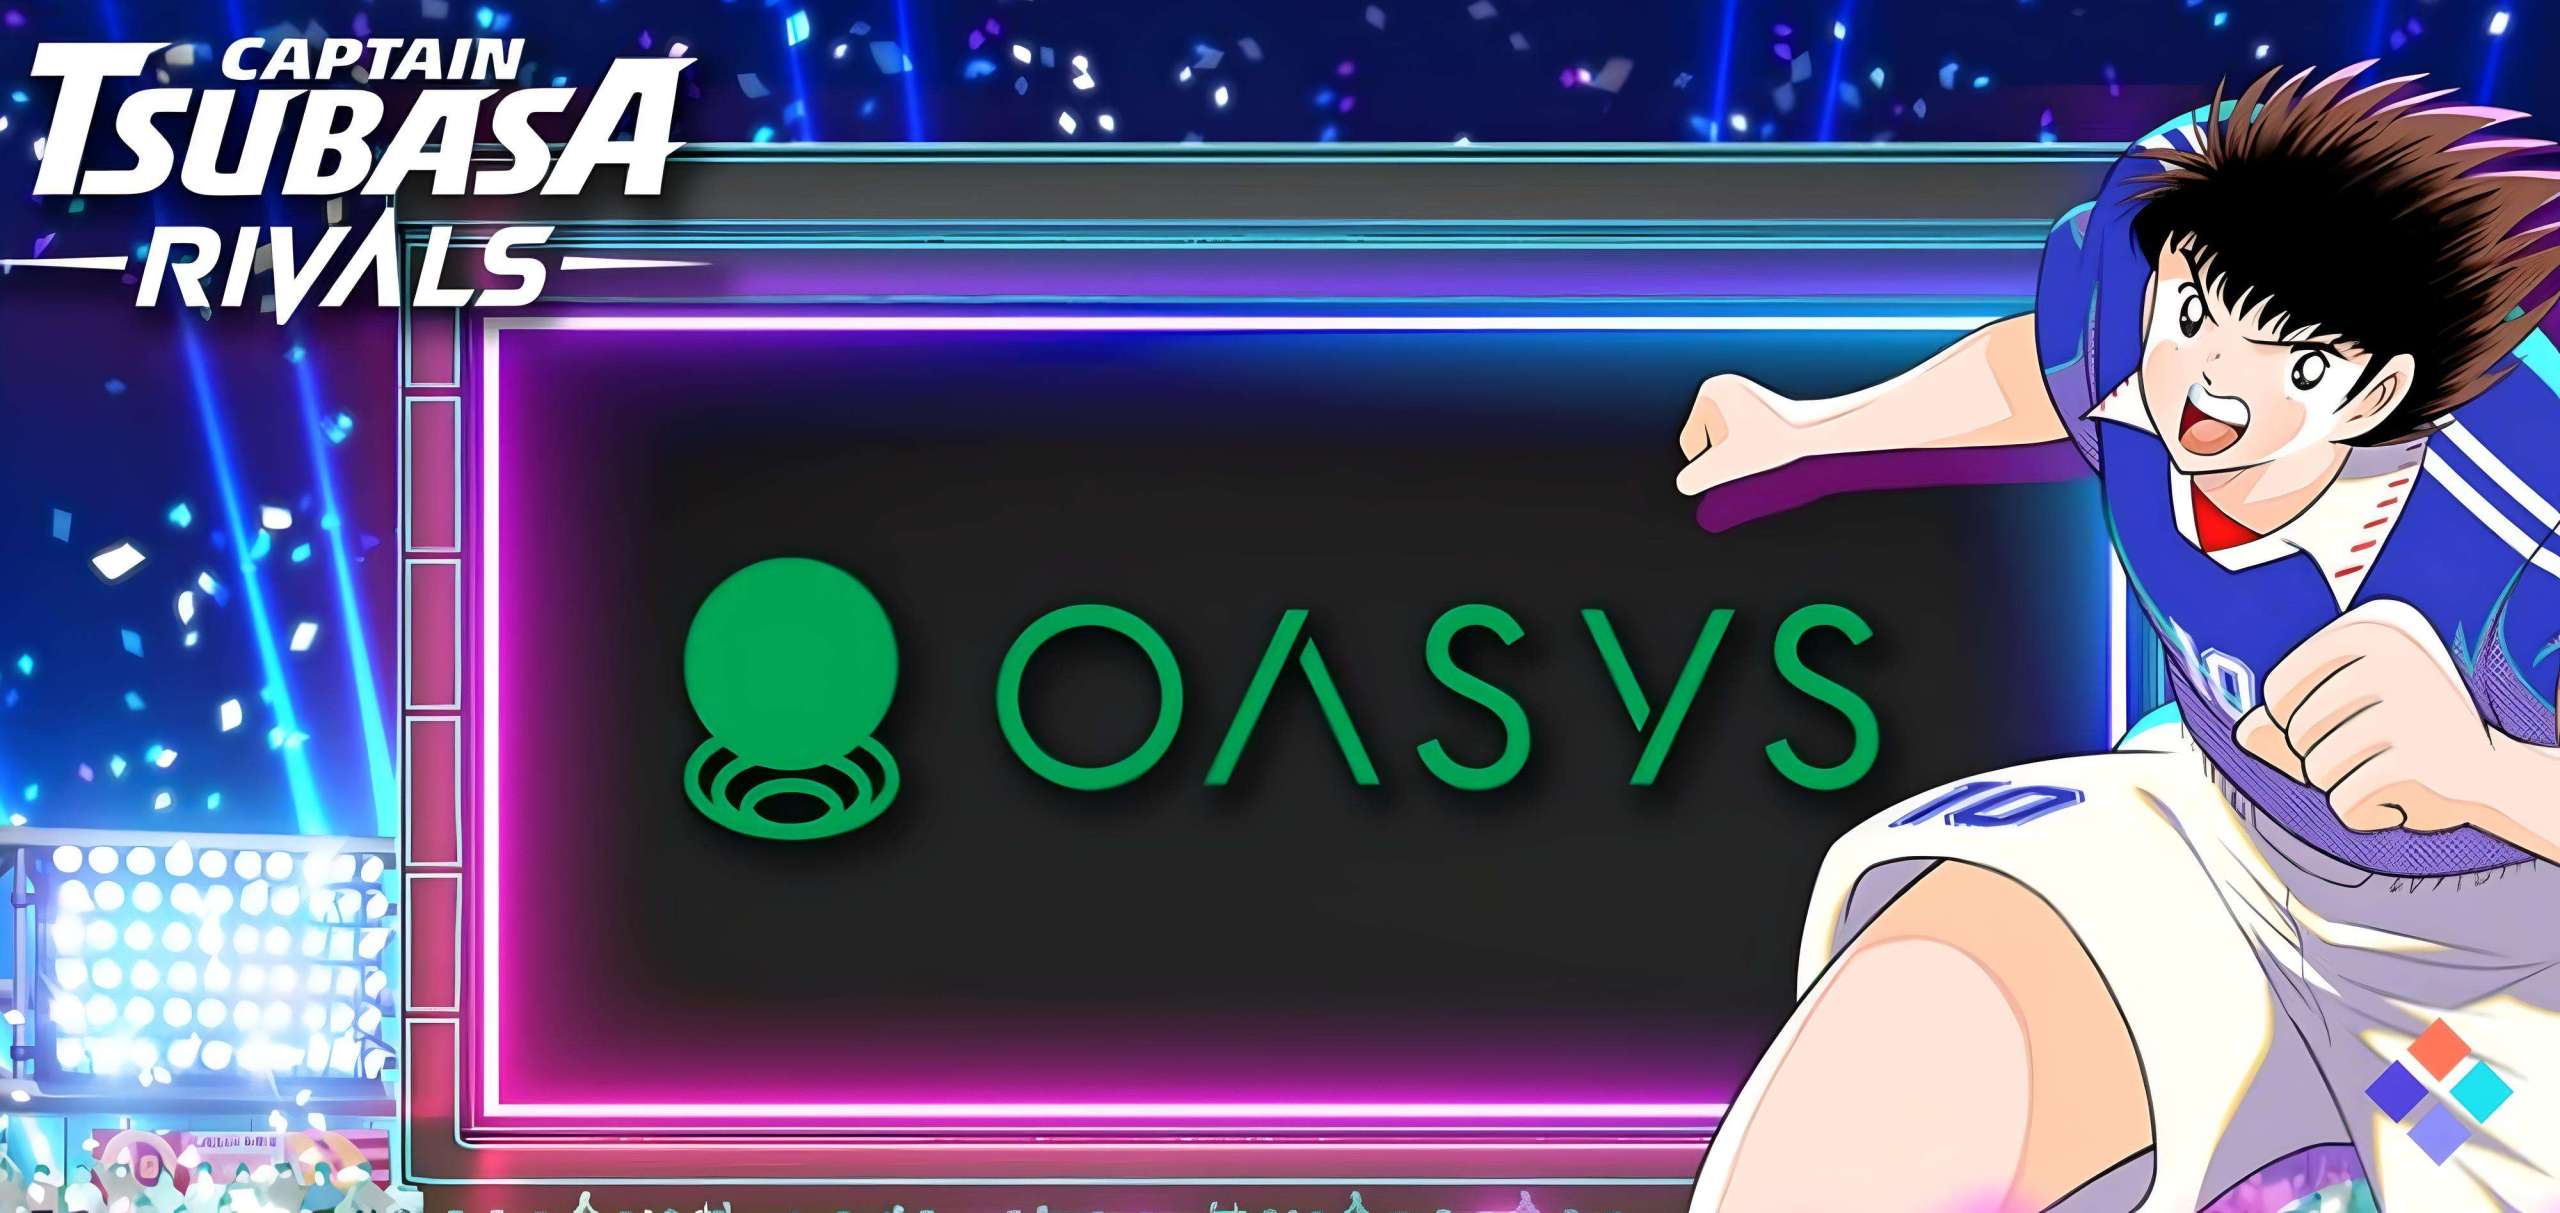 Oasys为漫画系列“Tsubasa船长”的NFT游戏做准备